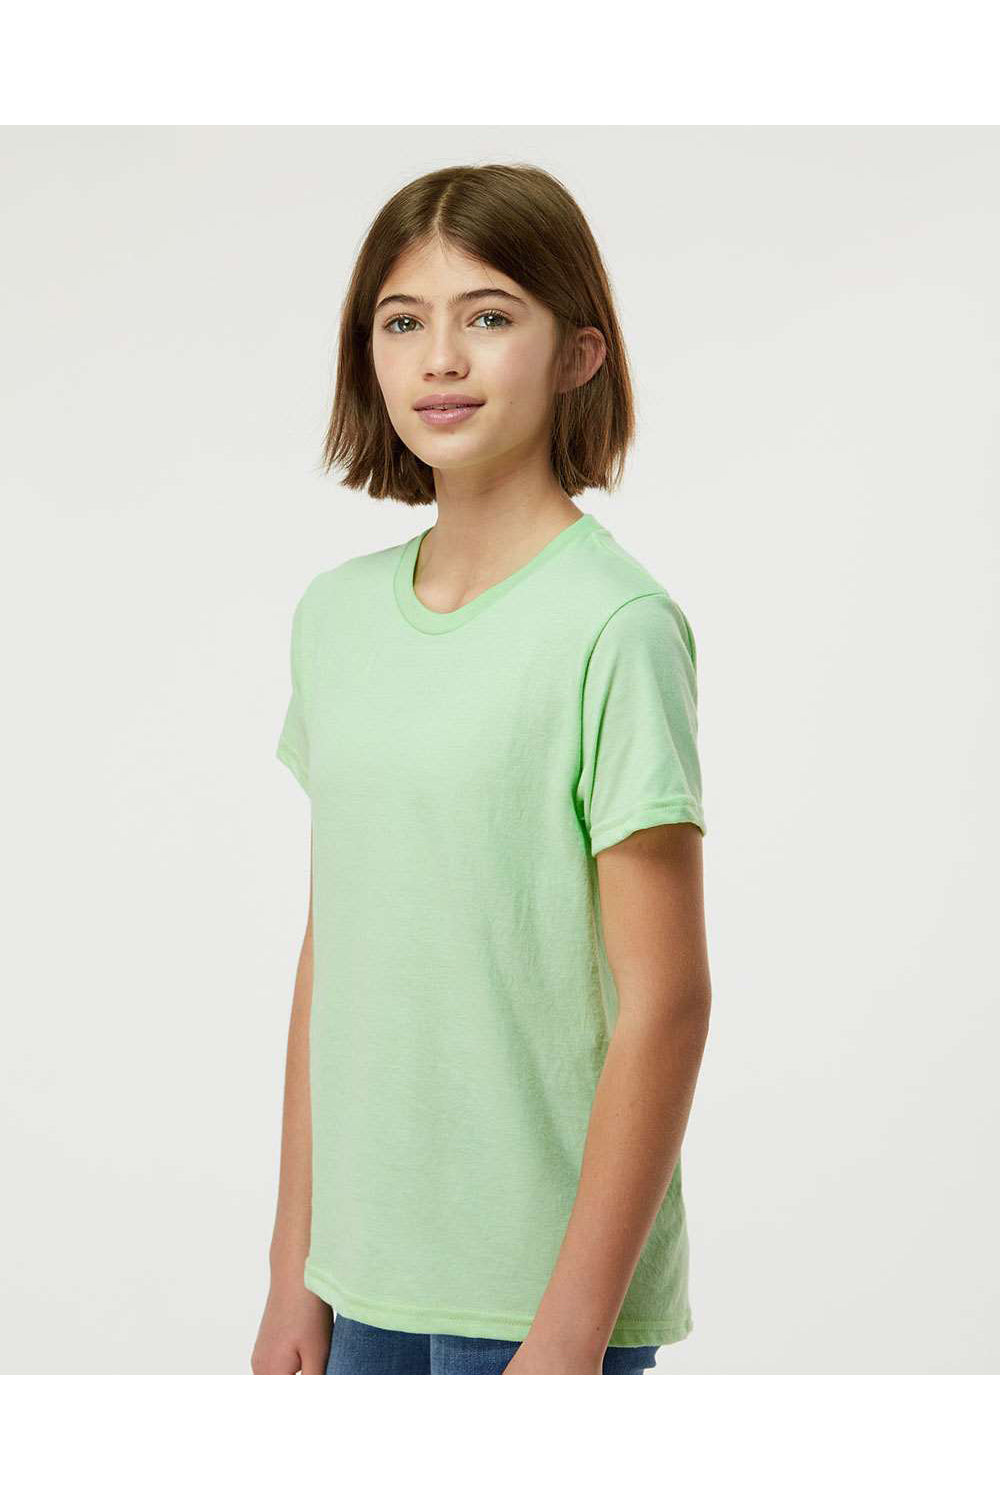 Tultex 235 Youth Fine Jersey Short Sleeve Crewneck T-Shirt Heather Neo Mint Green Model Side